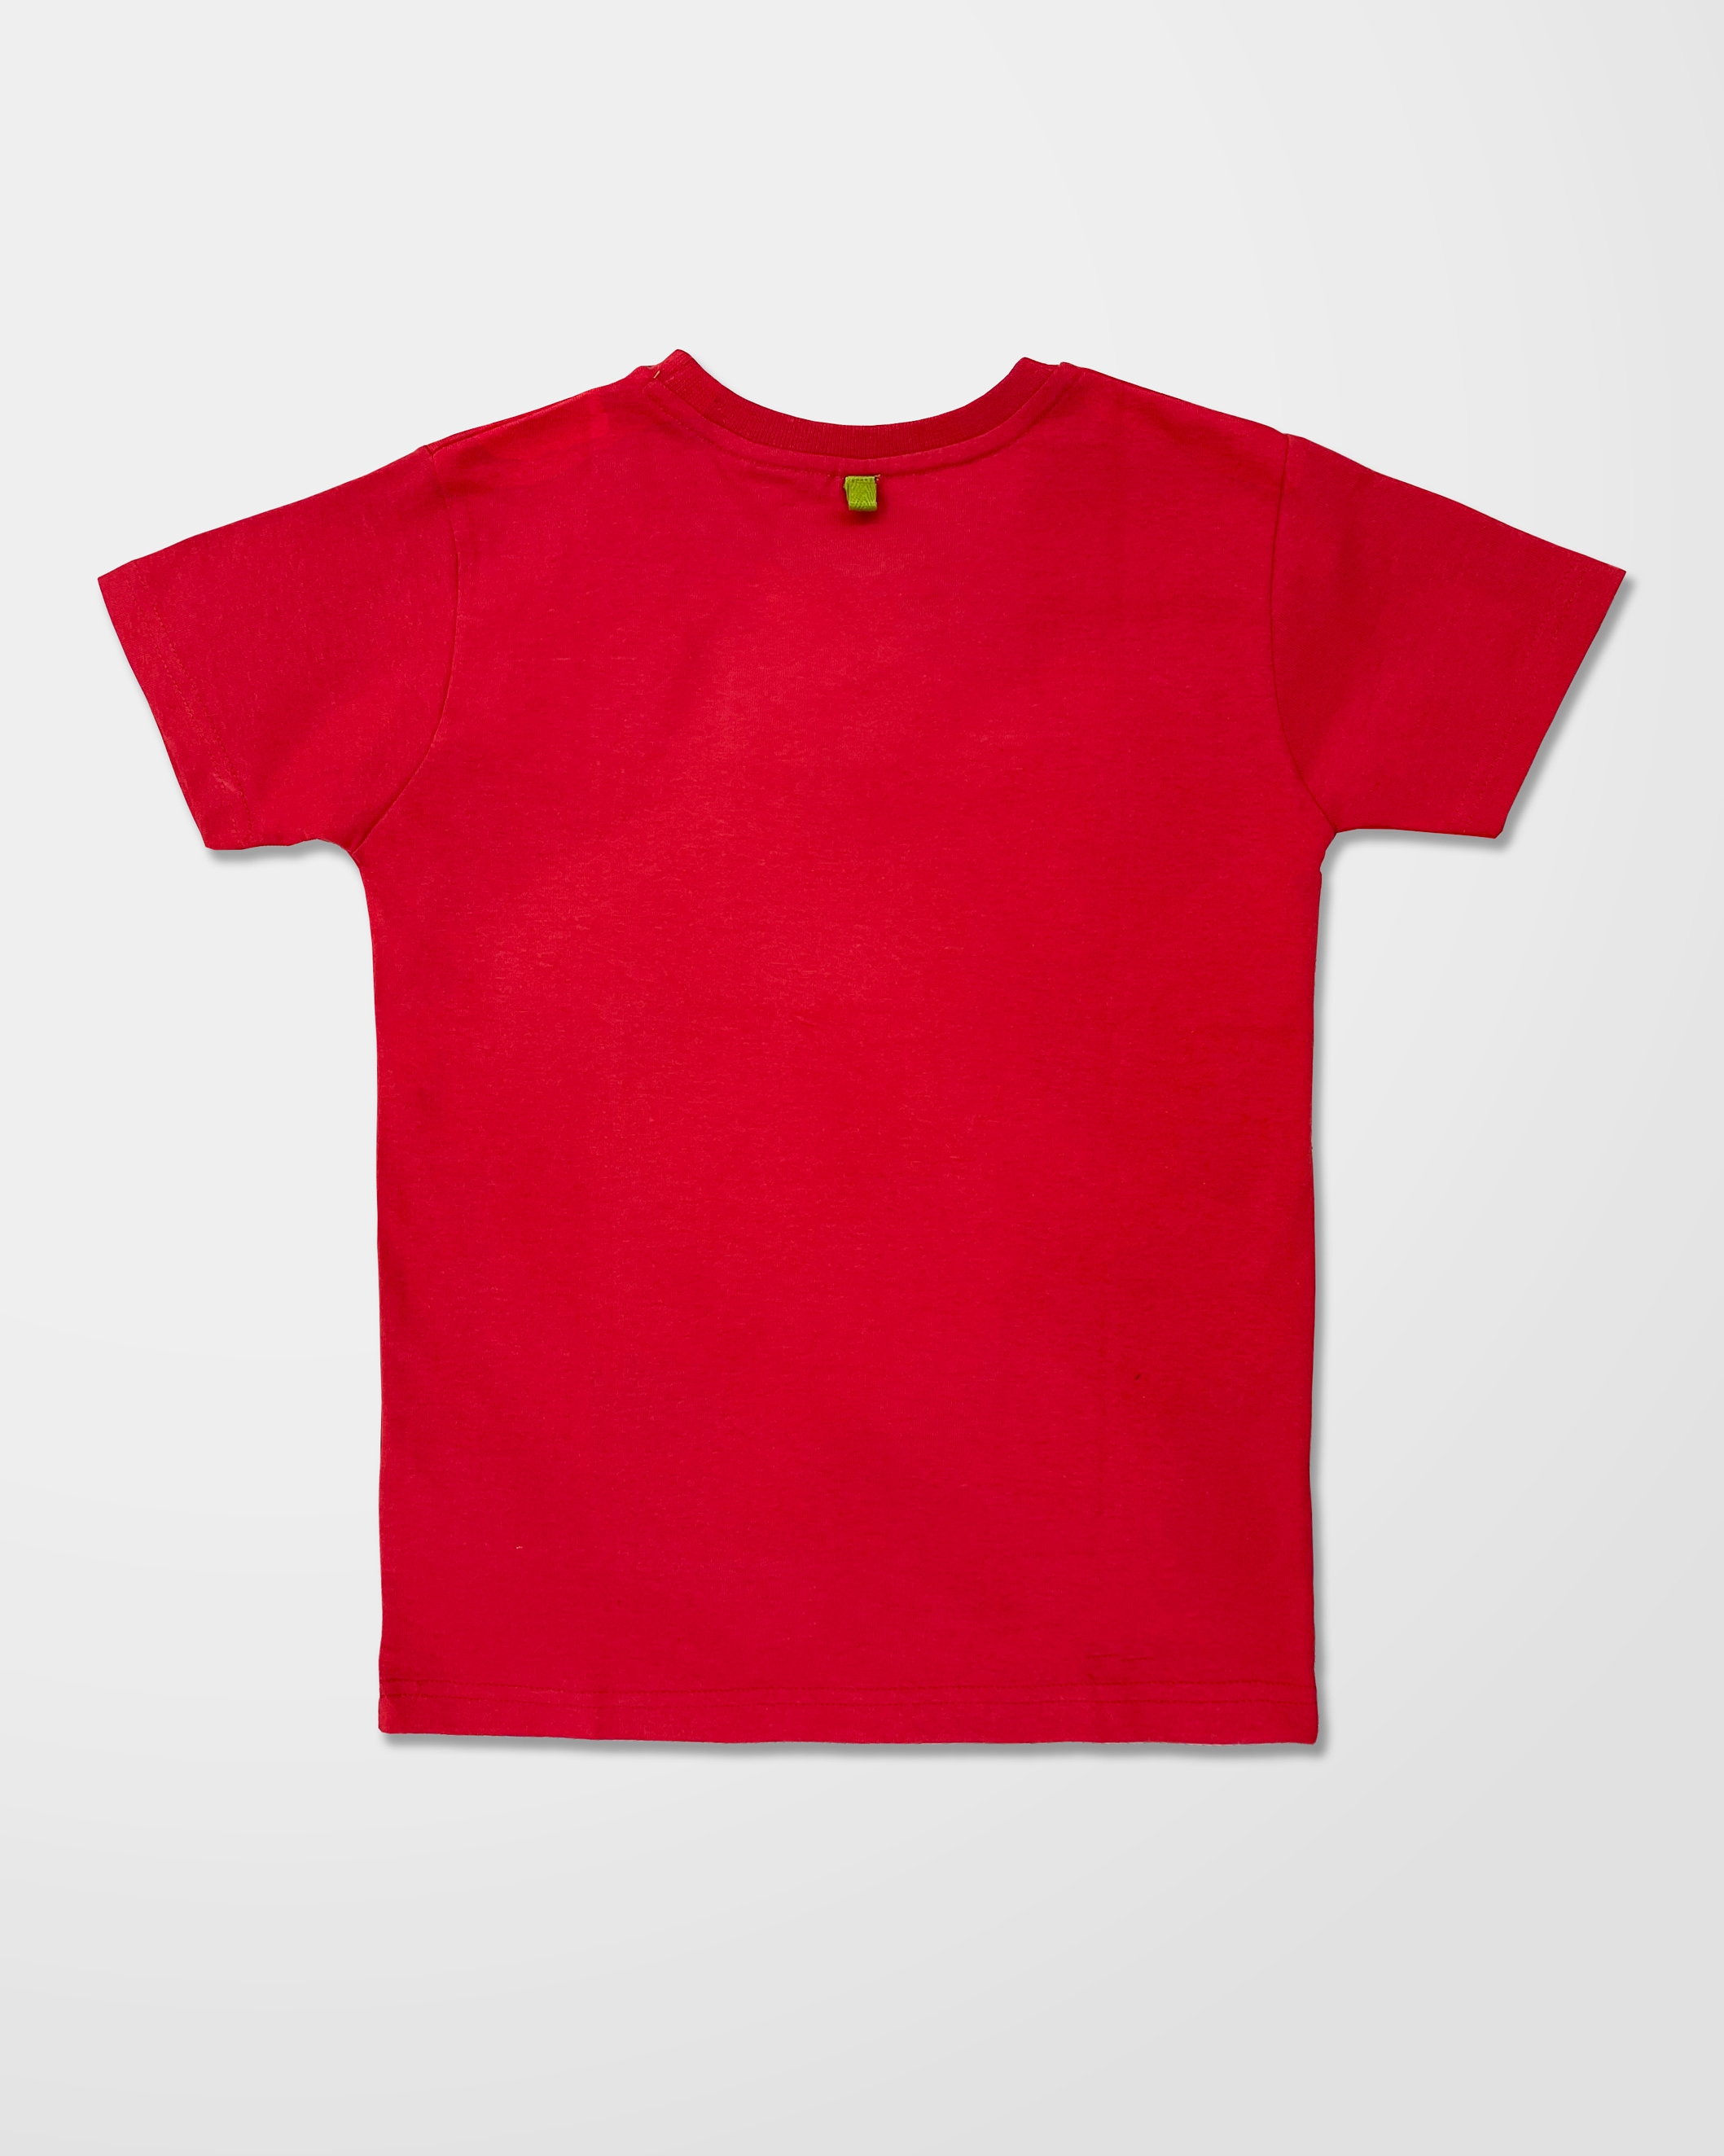 Vertu Duds | Vertu Duds Dino Printed Red Cotton Short Sleeve T-Shirt 3